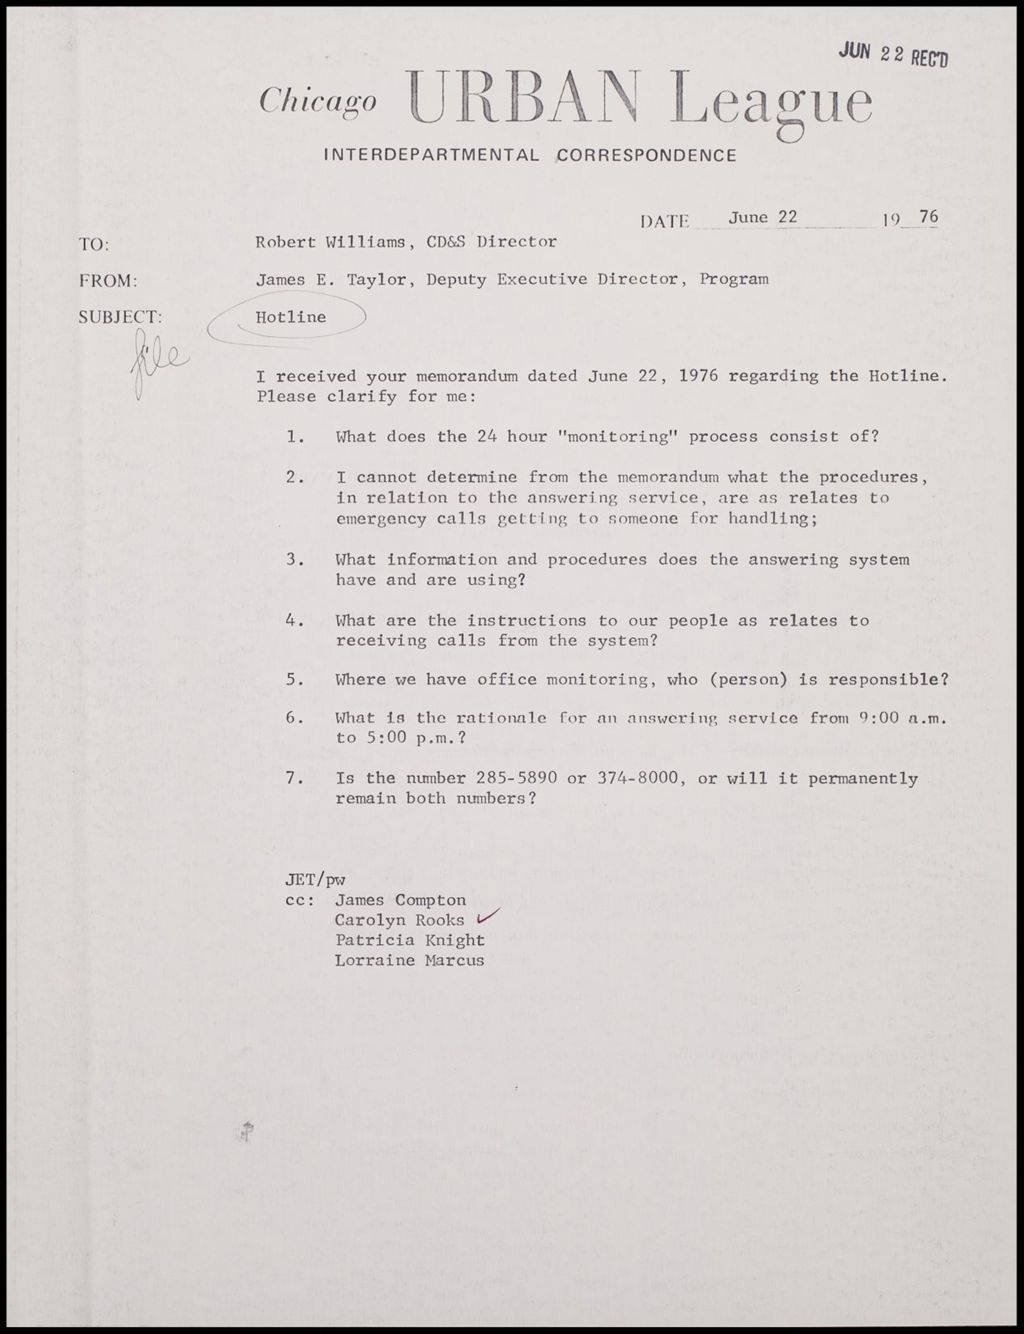 Miniature of Community Development and Services Hotline, 1976 (Folder II-2077)